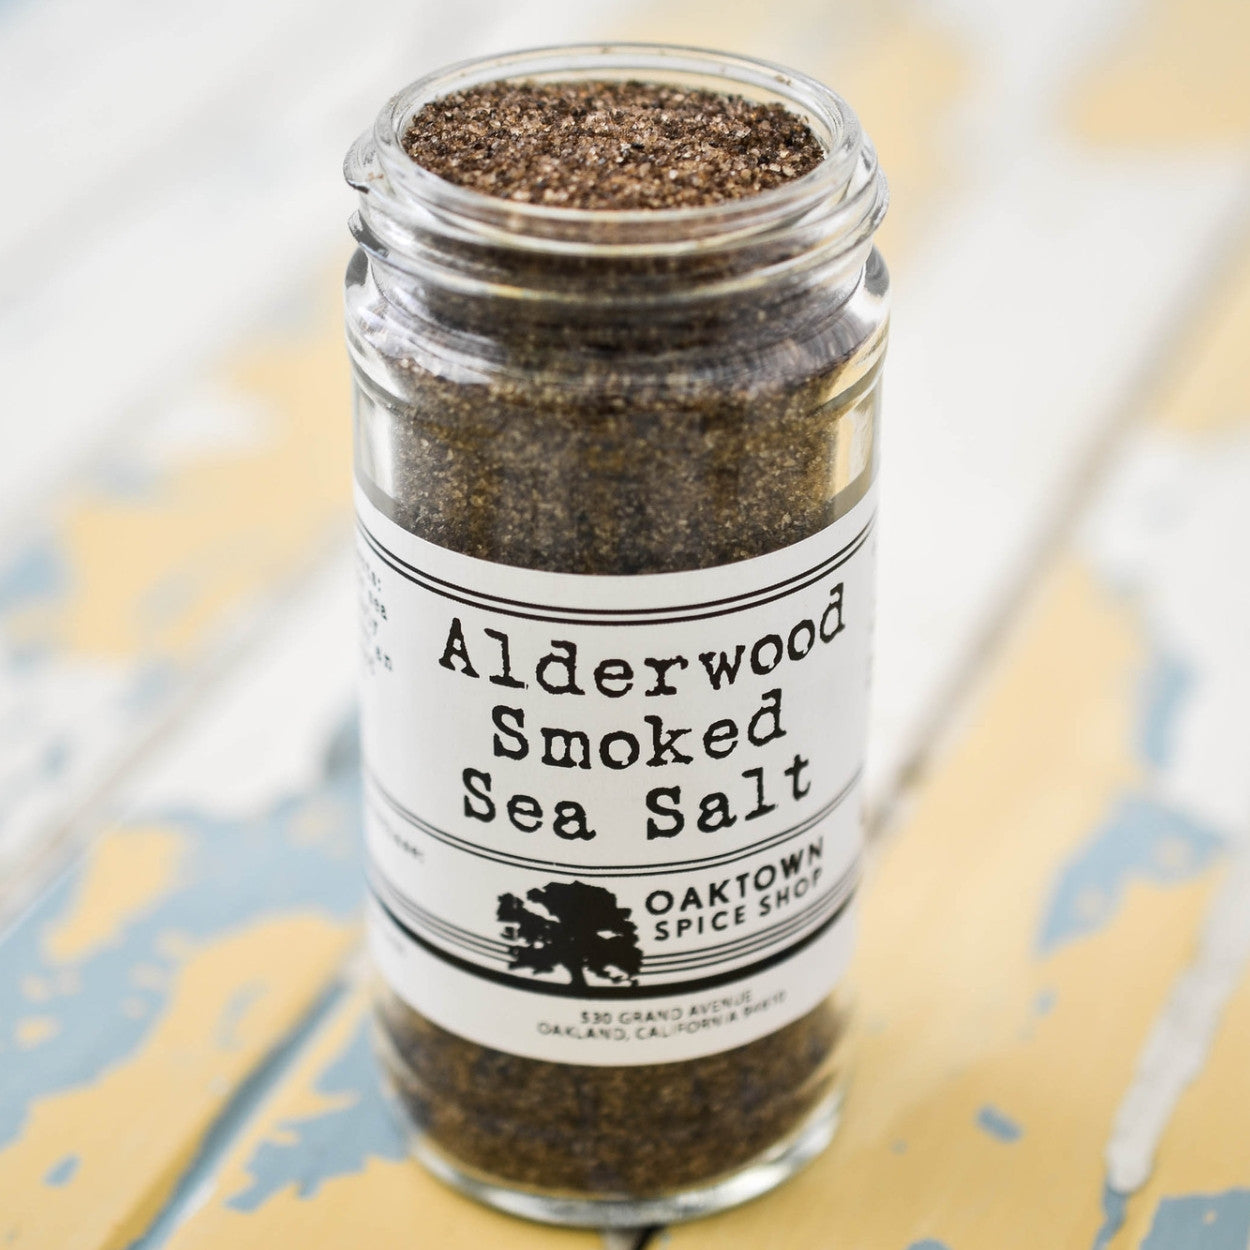 Alderwood Smoked Salt 1/2 cup jar This Pacific Sea Salt is Smoked over True Alderwood from Oaktown Spice Shop